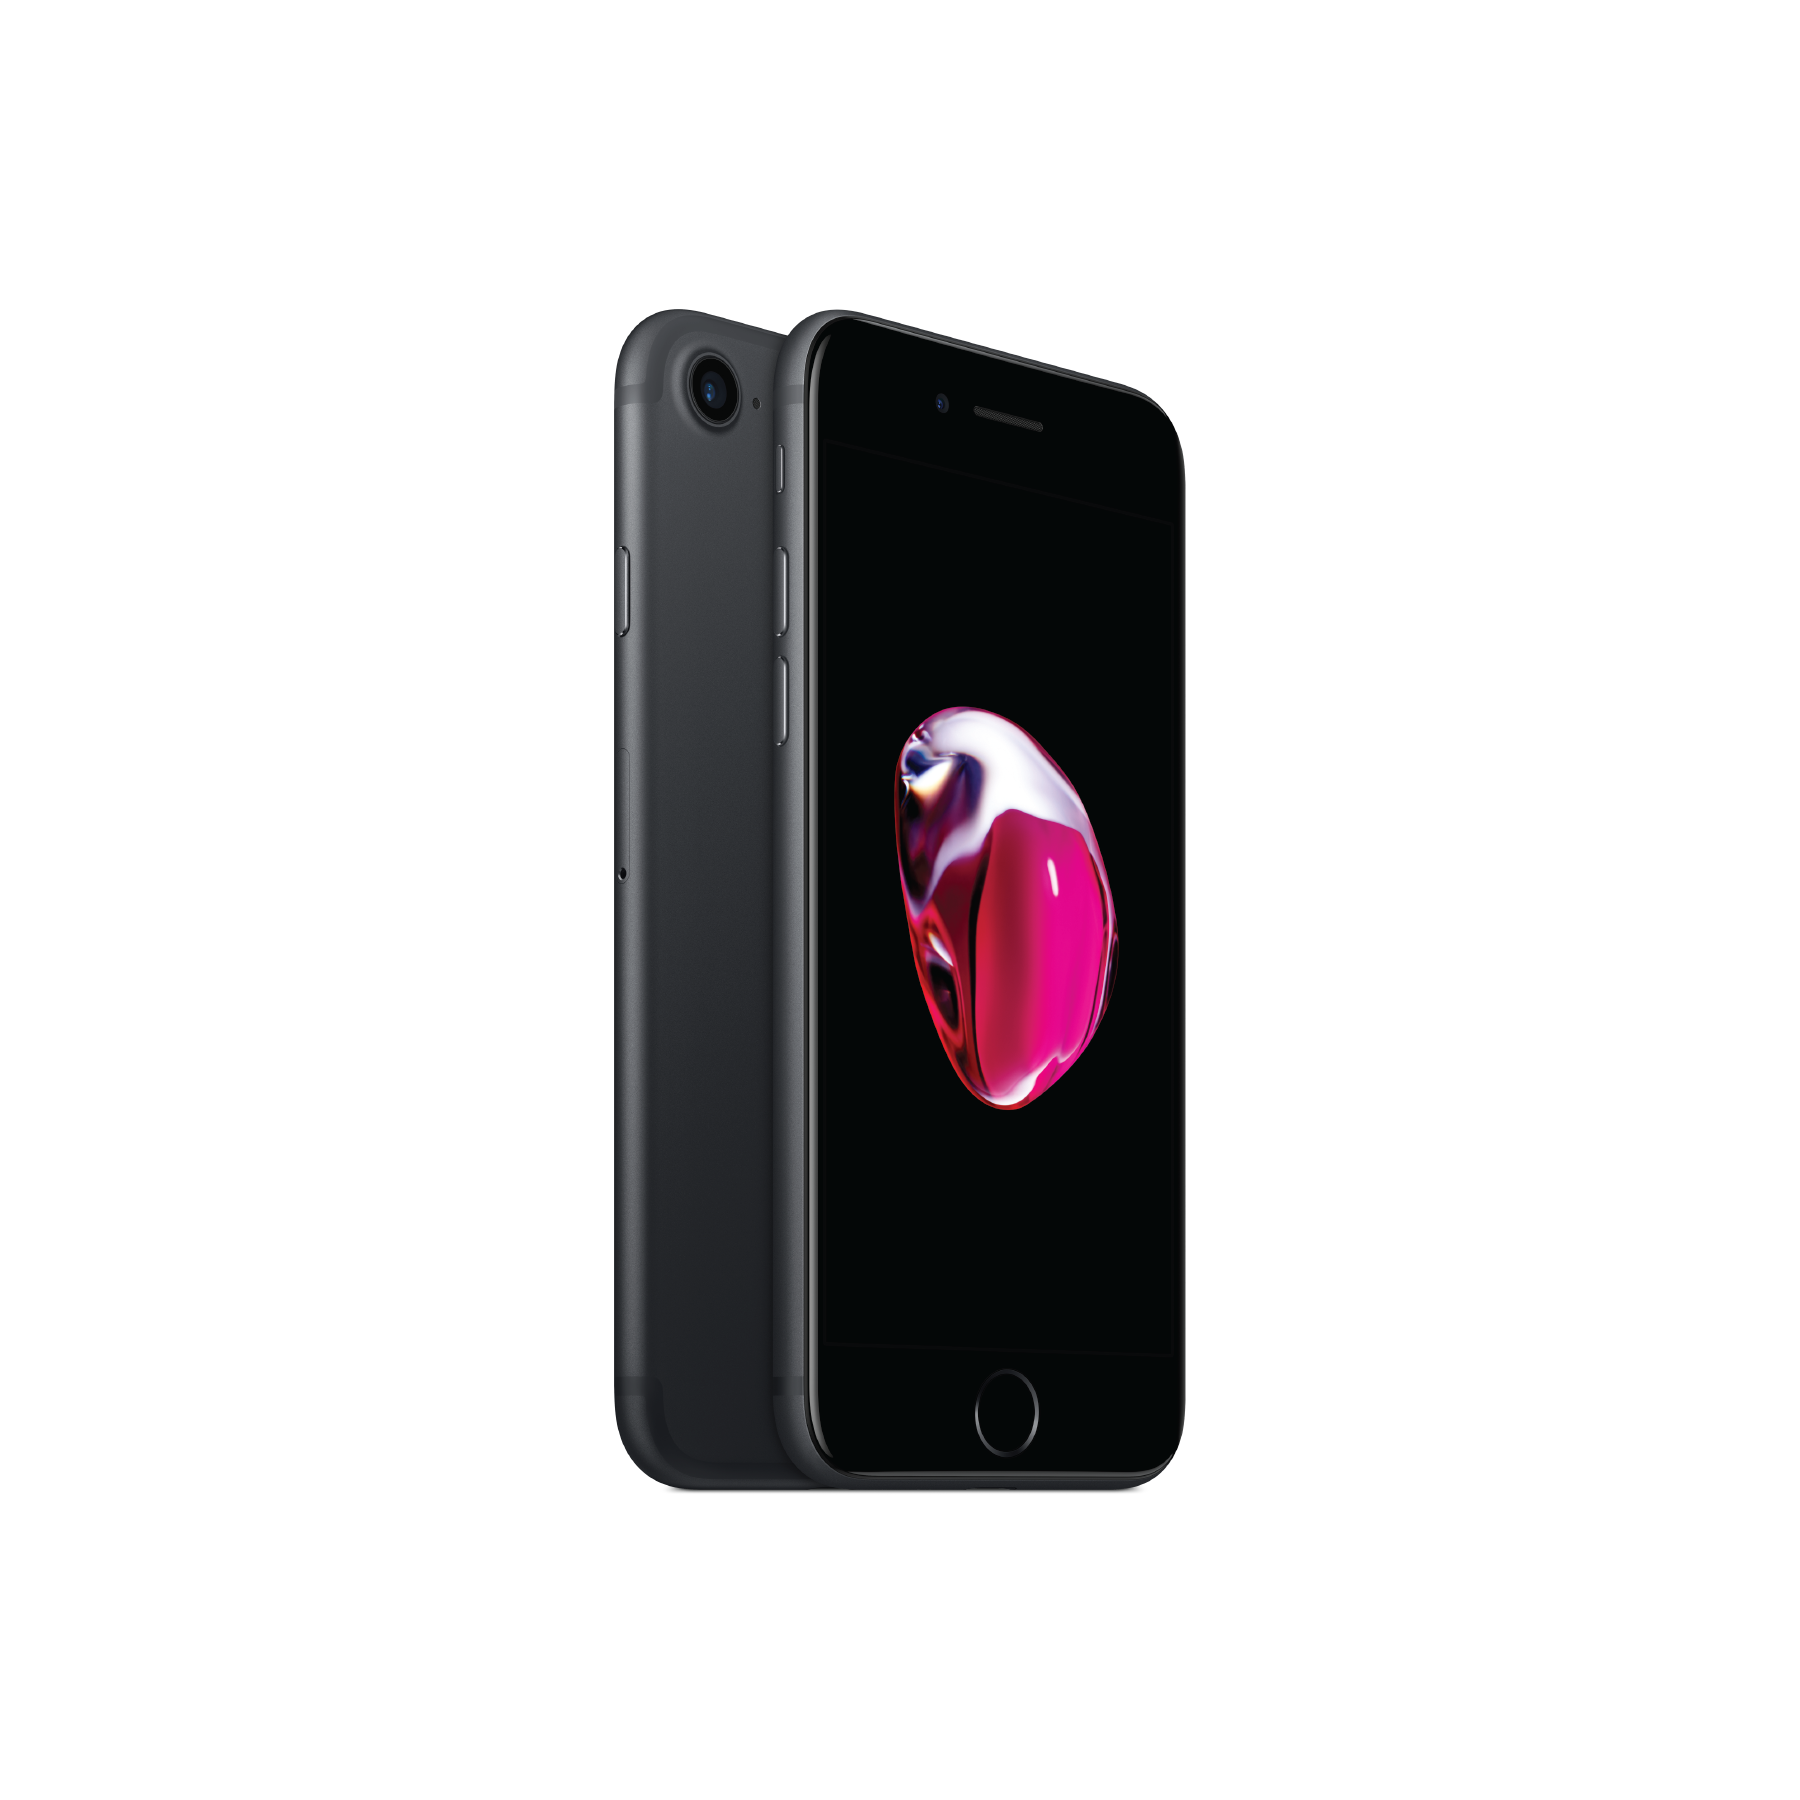 iPhone 7 128GB - Black (Better)